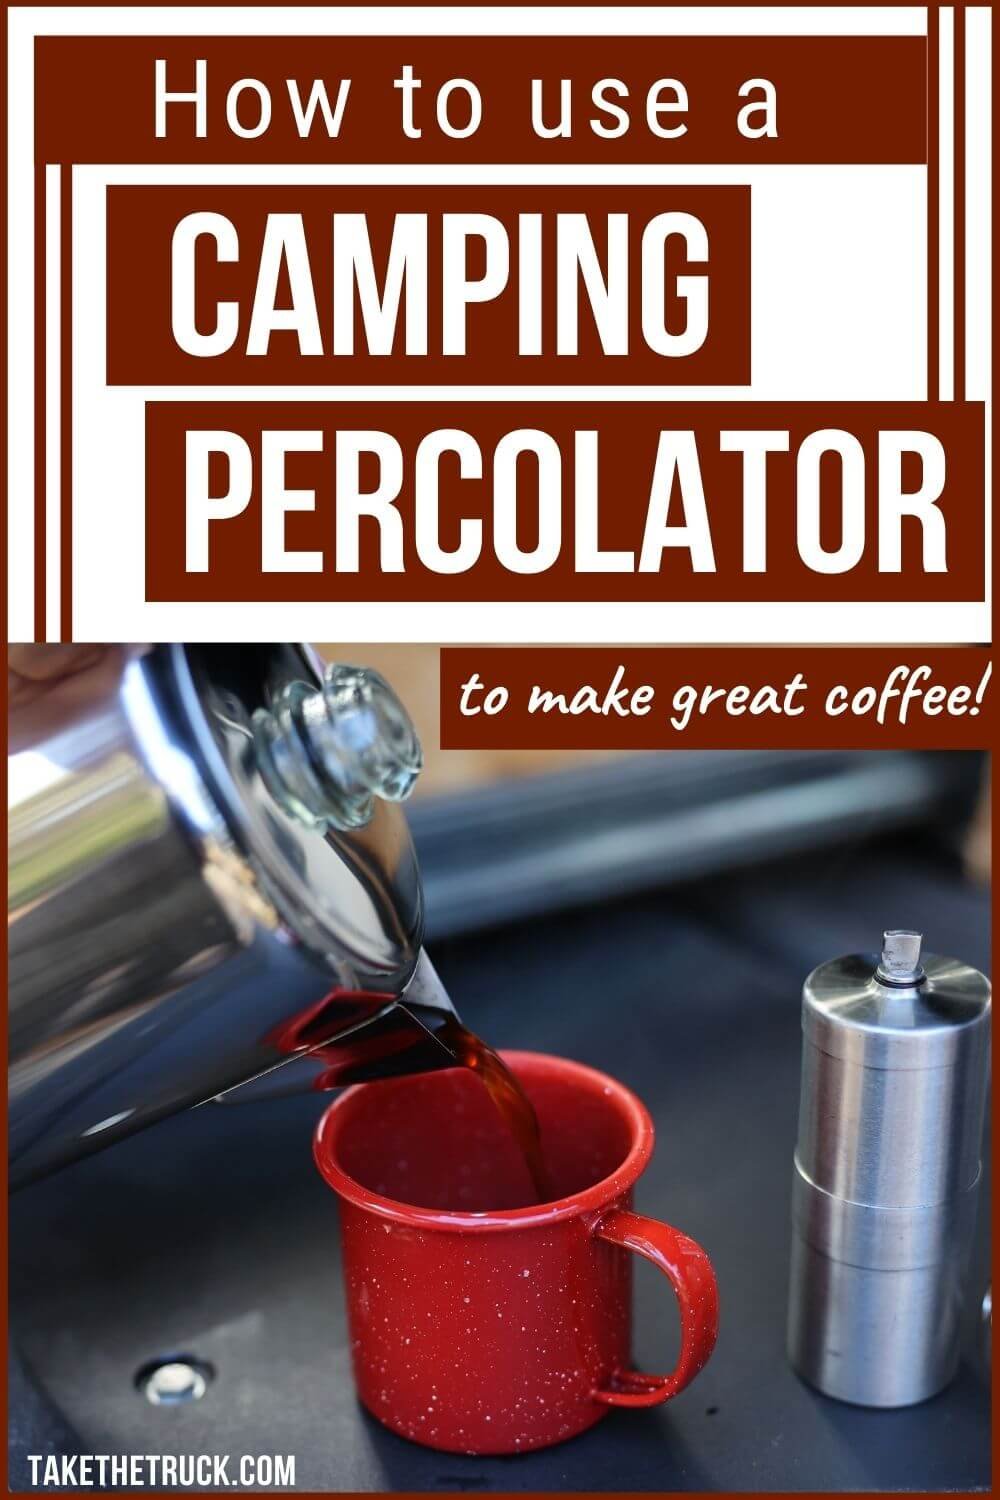 https://images.squarespace-cdn.com/content/v1/5bbd67d490f9042649da280e/1636984902139-VZZZUN2JAOPNRTKANQZP/percolator-coffee-camping-how-to-make.jpg